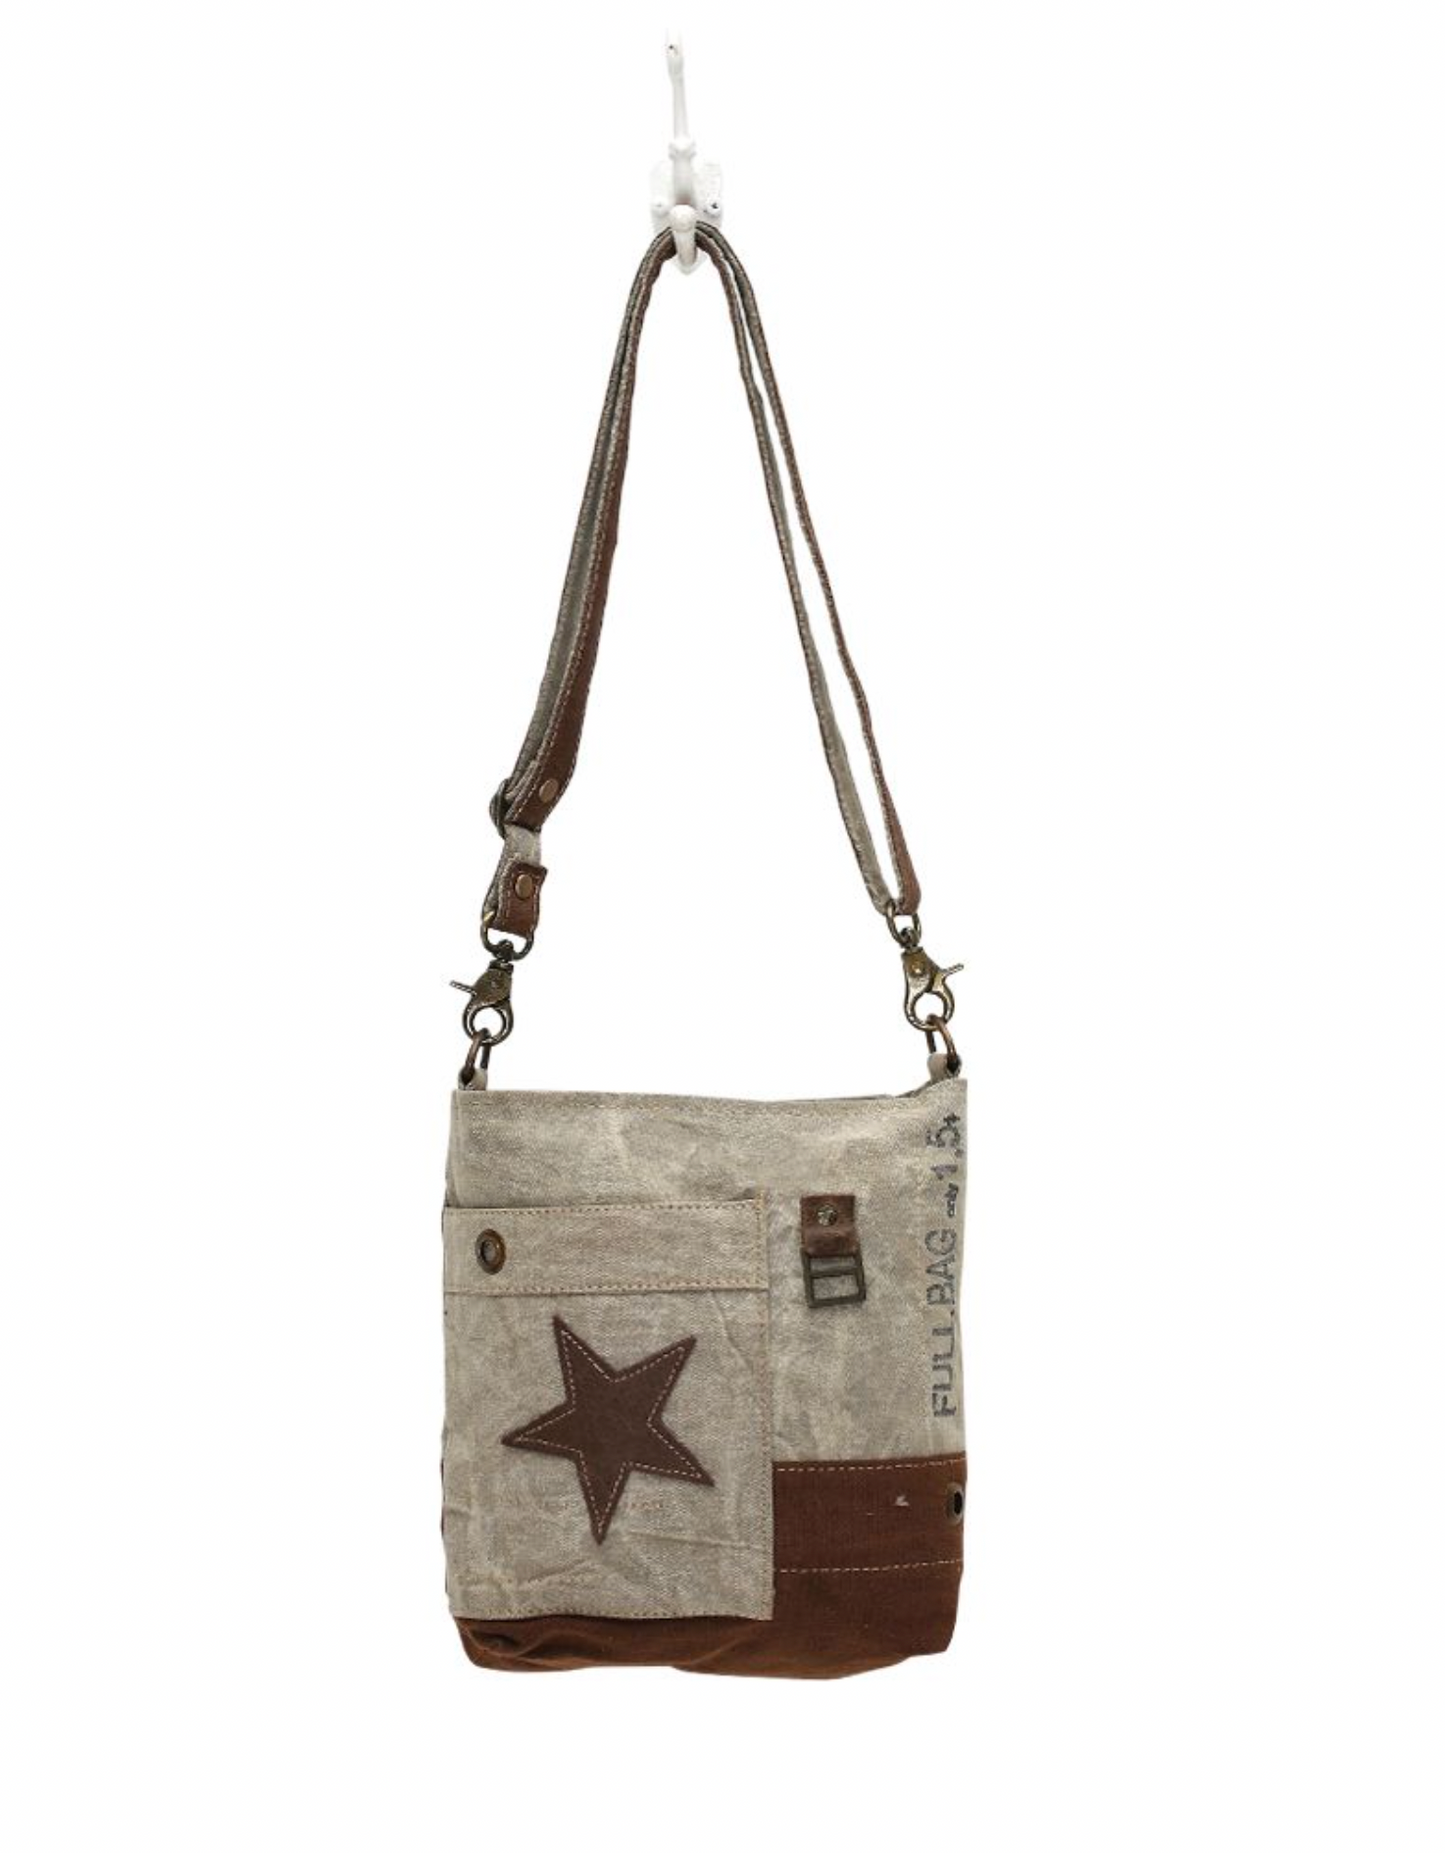 Leather Star Cross Body Bag